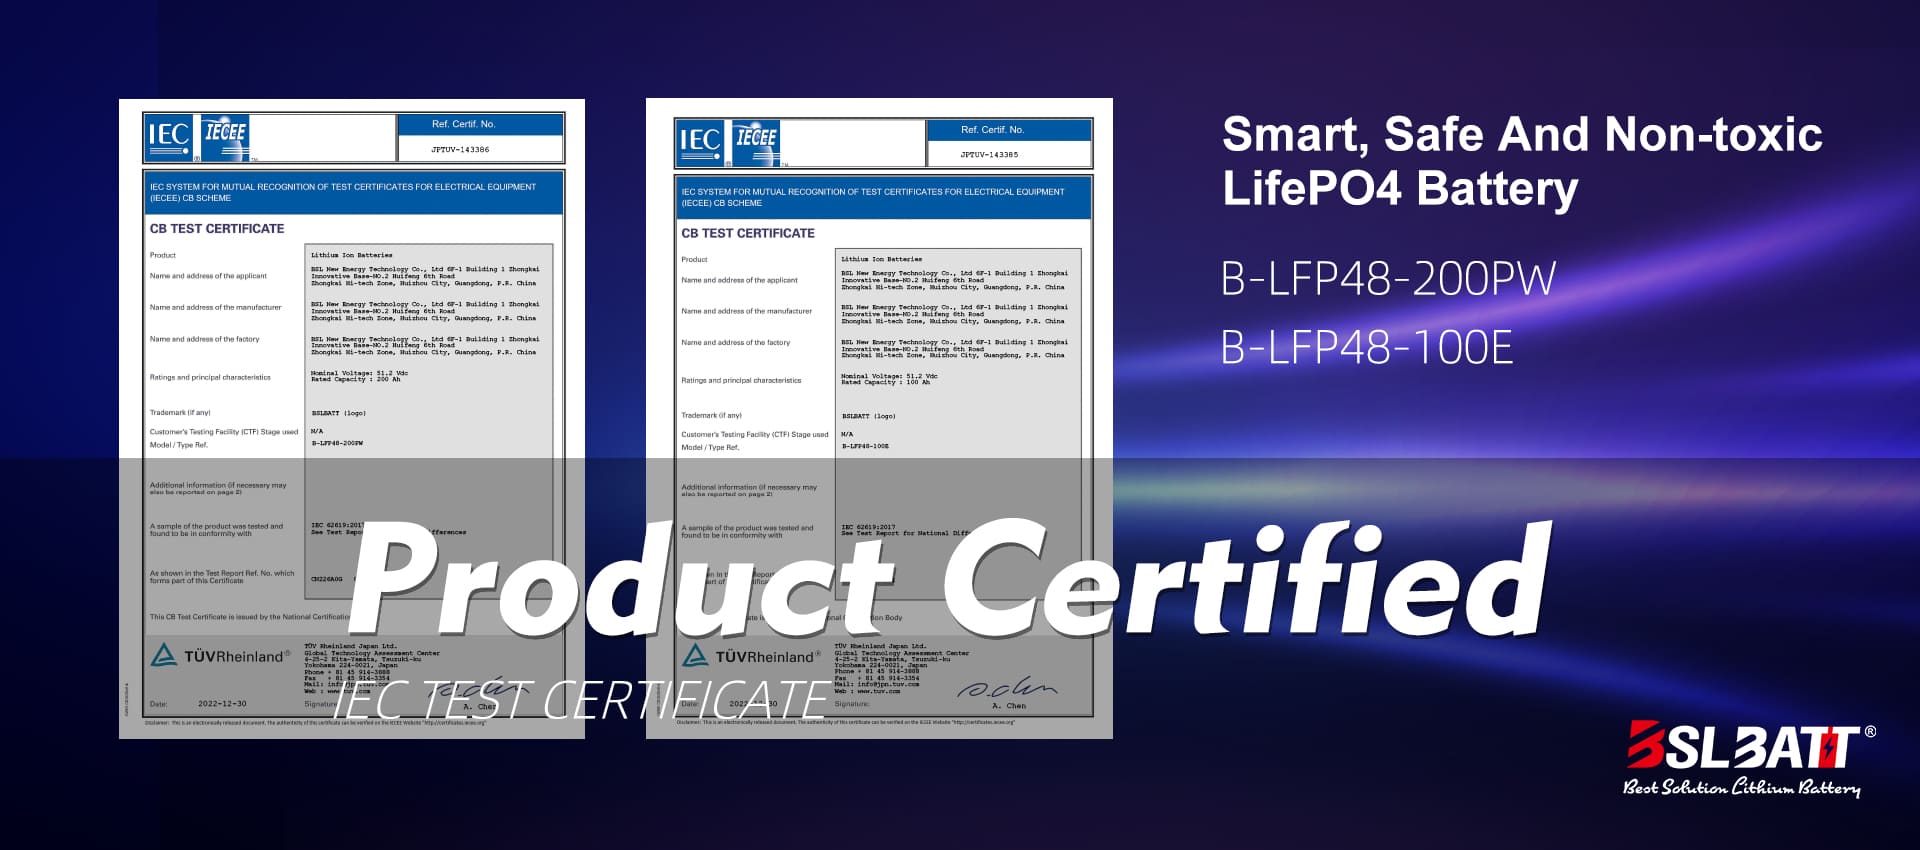 BSLBATT Achieves IEC 62619 Certification on Its 48V 100Ah LiFePO4